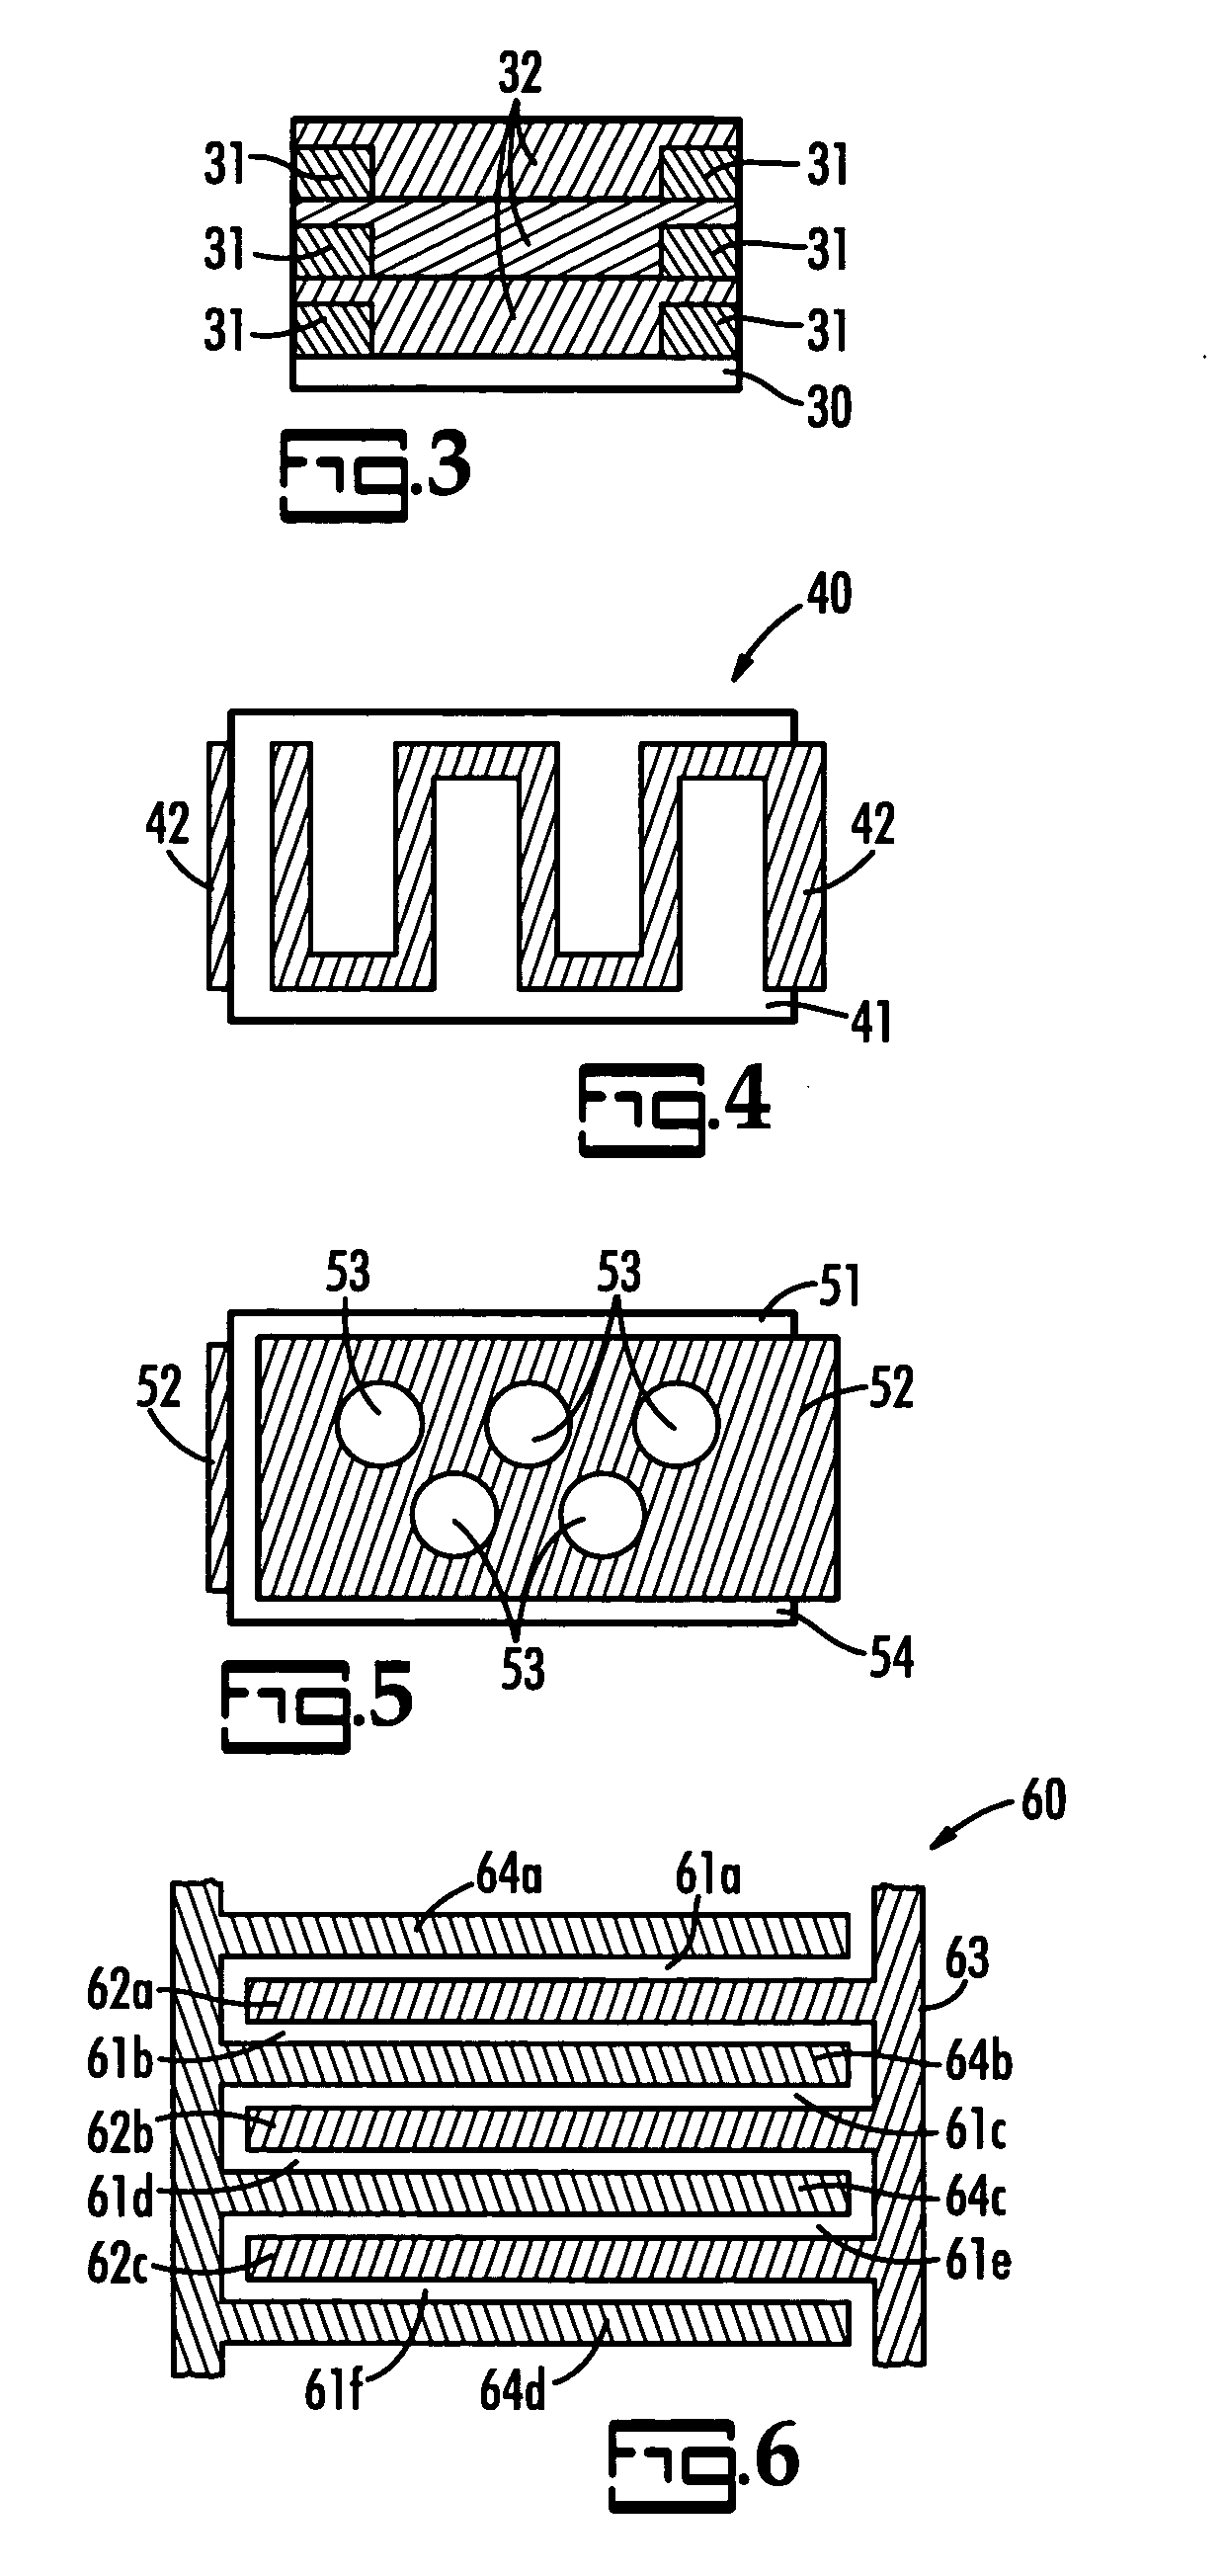 Process for manufacture of ceramic capacitors using ink jet printing